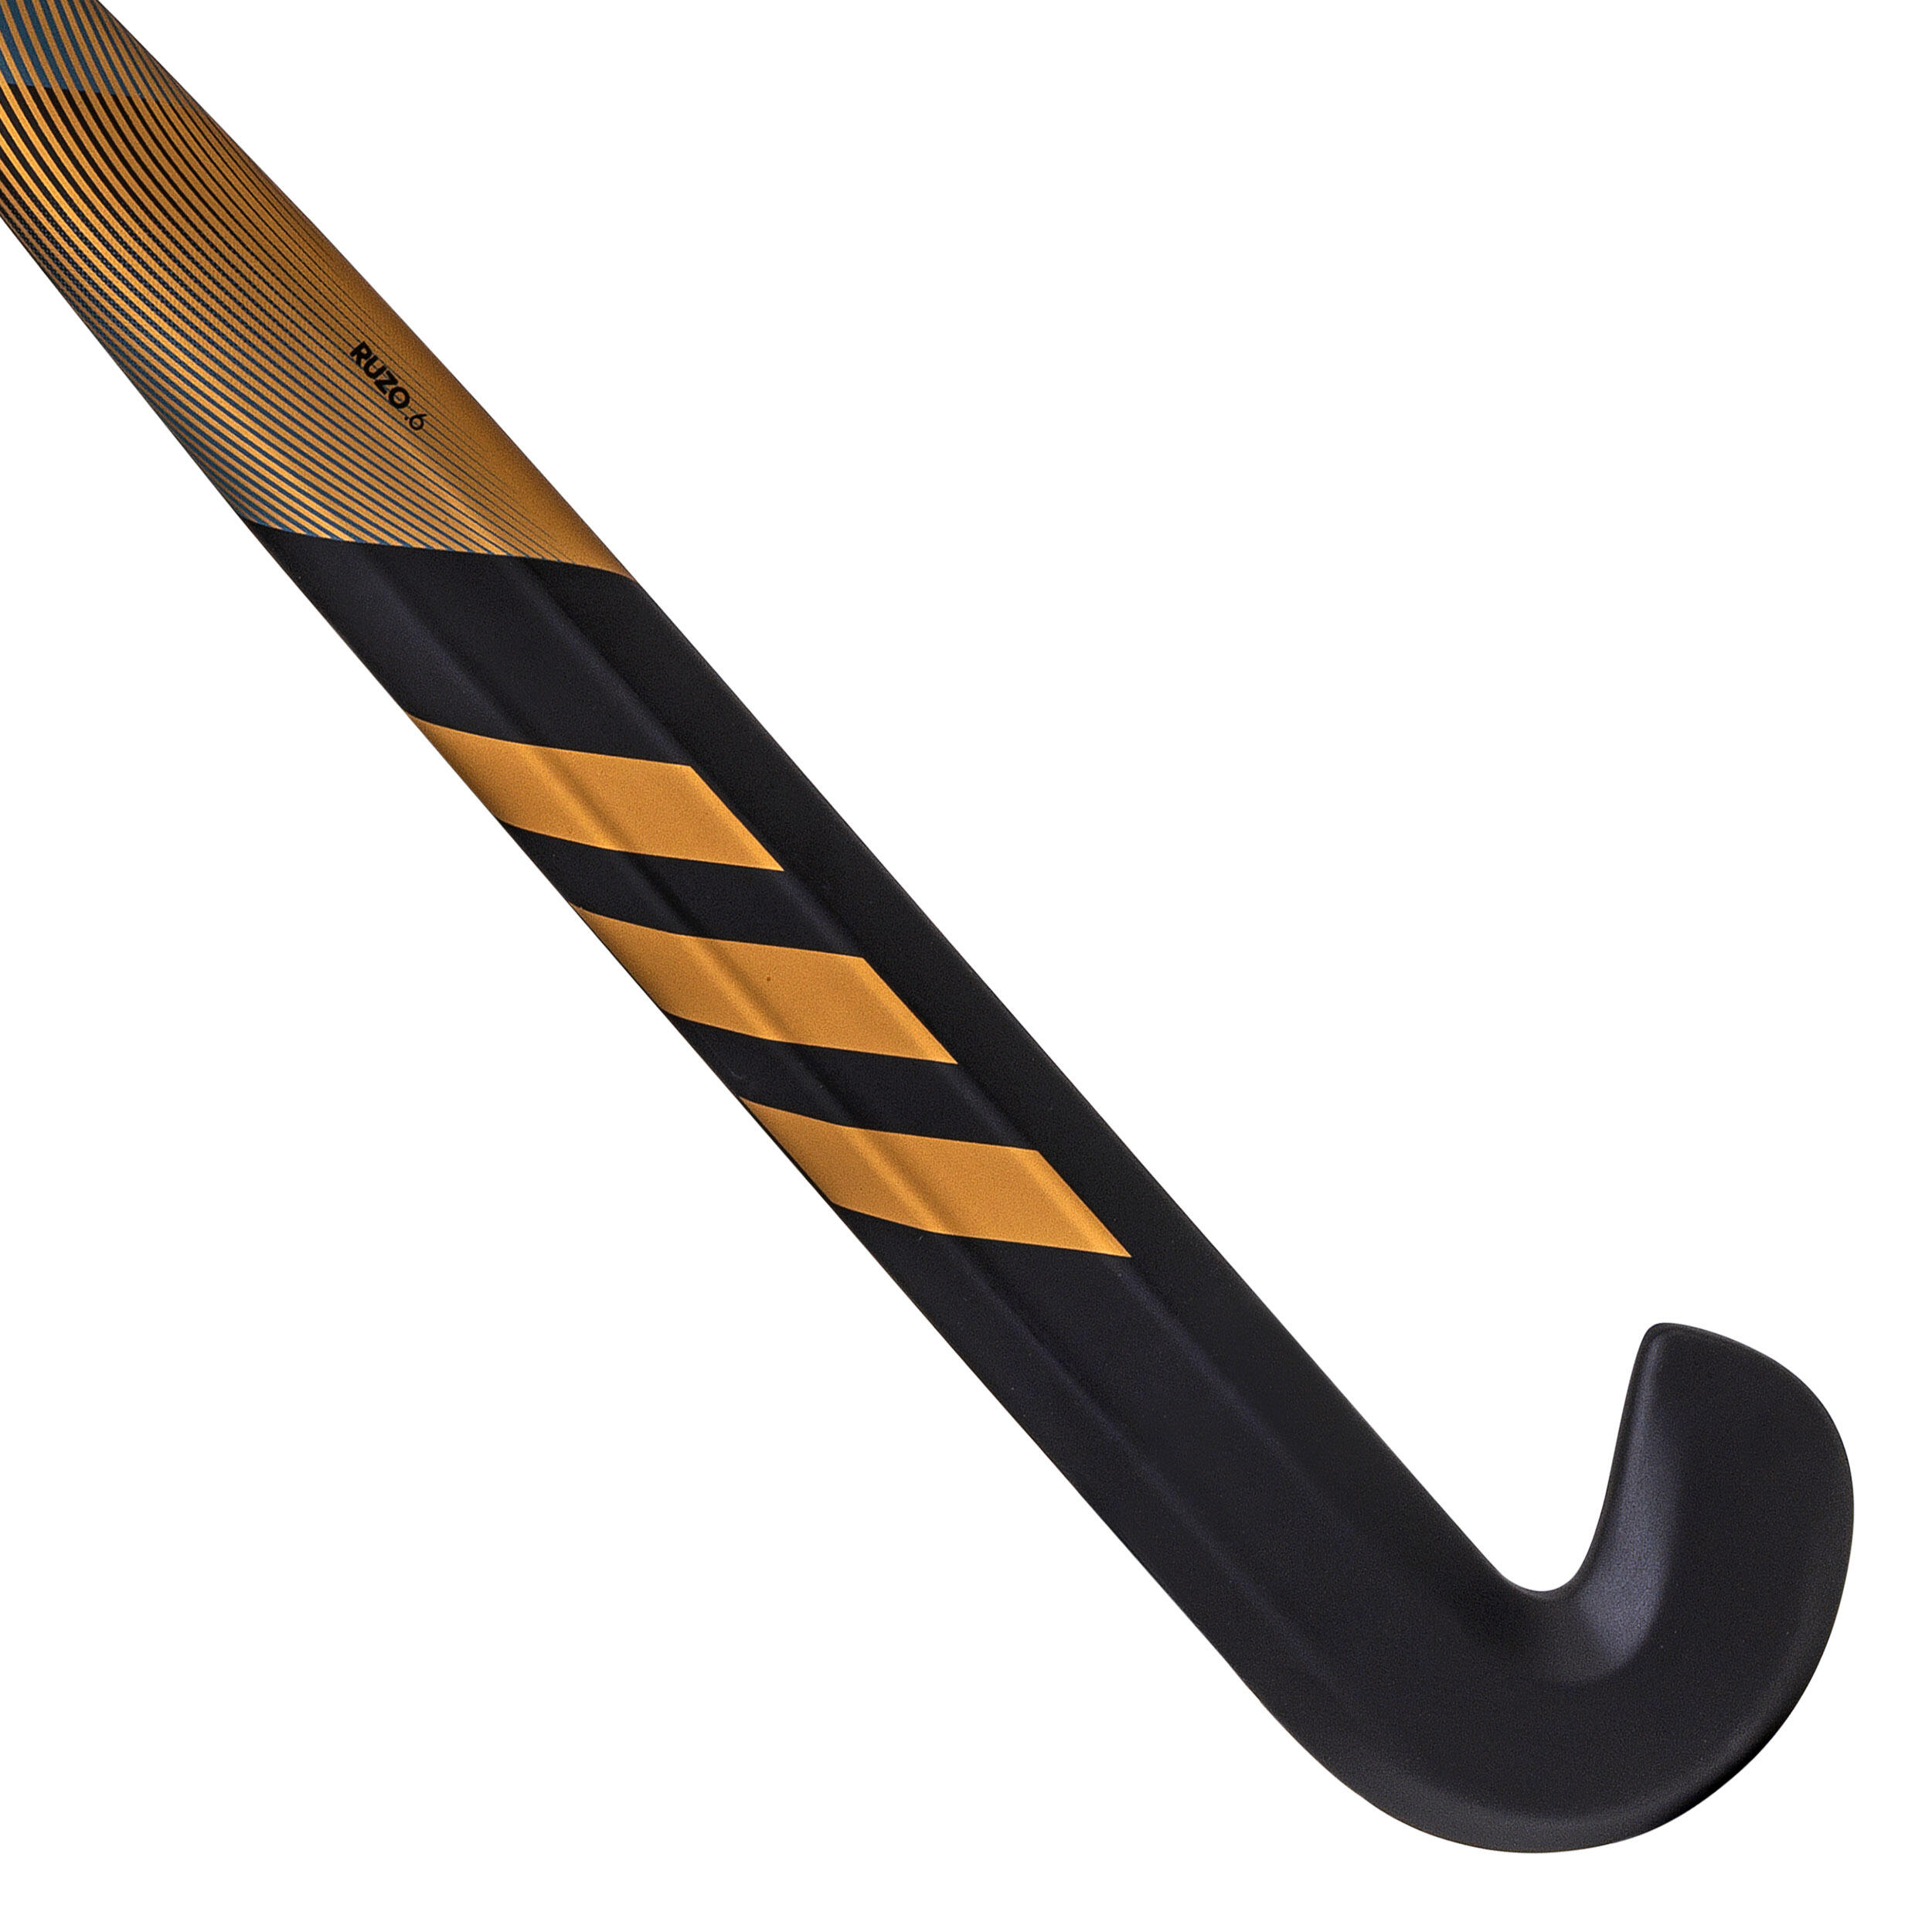 Adult Intermediate 30% Carbon Low Bow Field Hockey Stick Ruzo.6 - Gold/Black 1/12